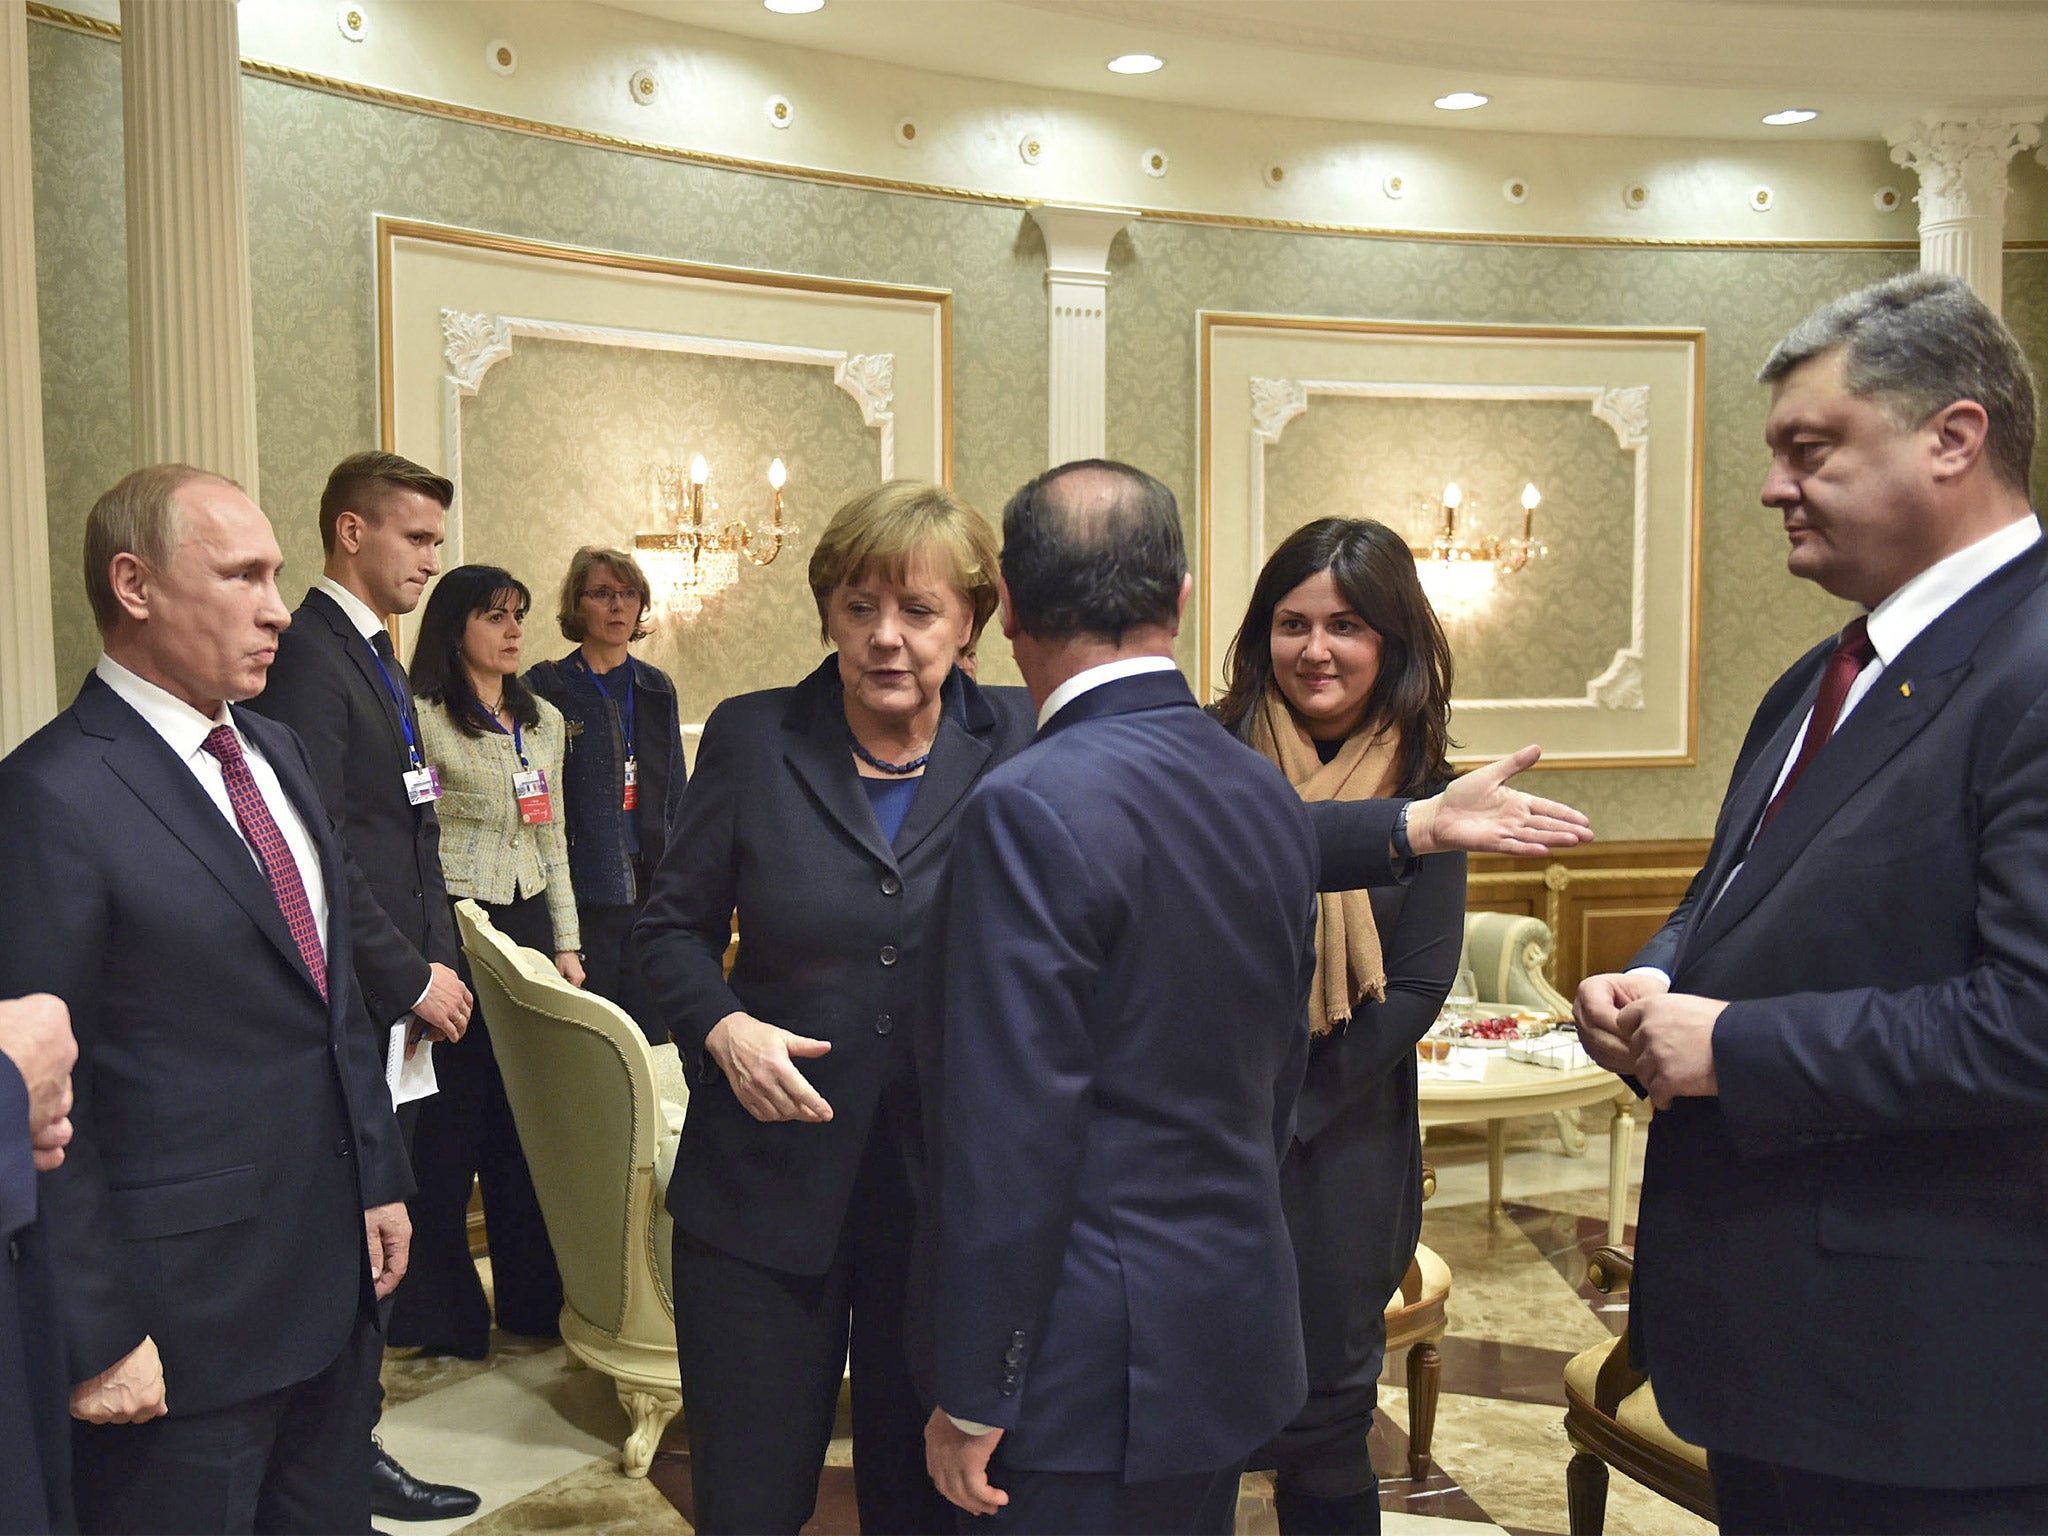 From left: Vladimir Putin, Angela Merkel, François Hollande and Petro Poroshenko in the Belarusian capital on Wednesday night before talks about the violence in Ukraine